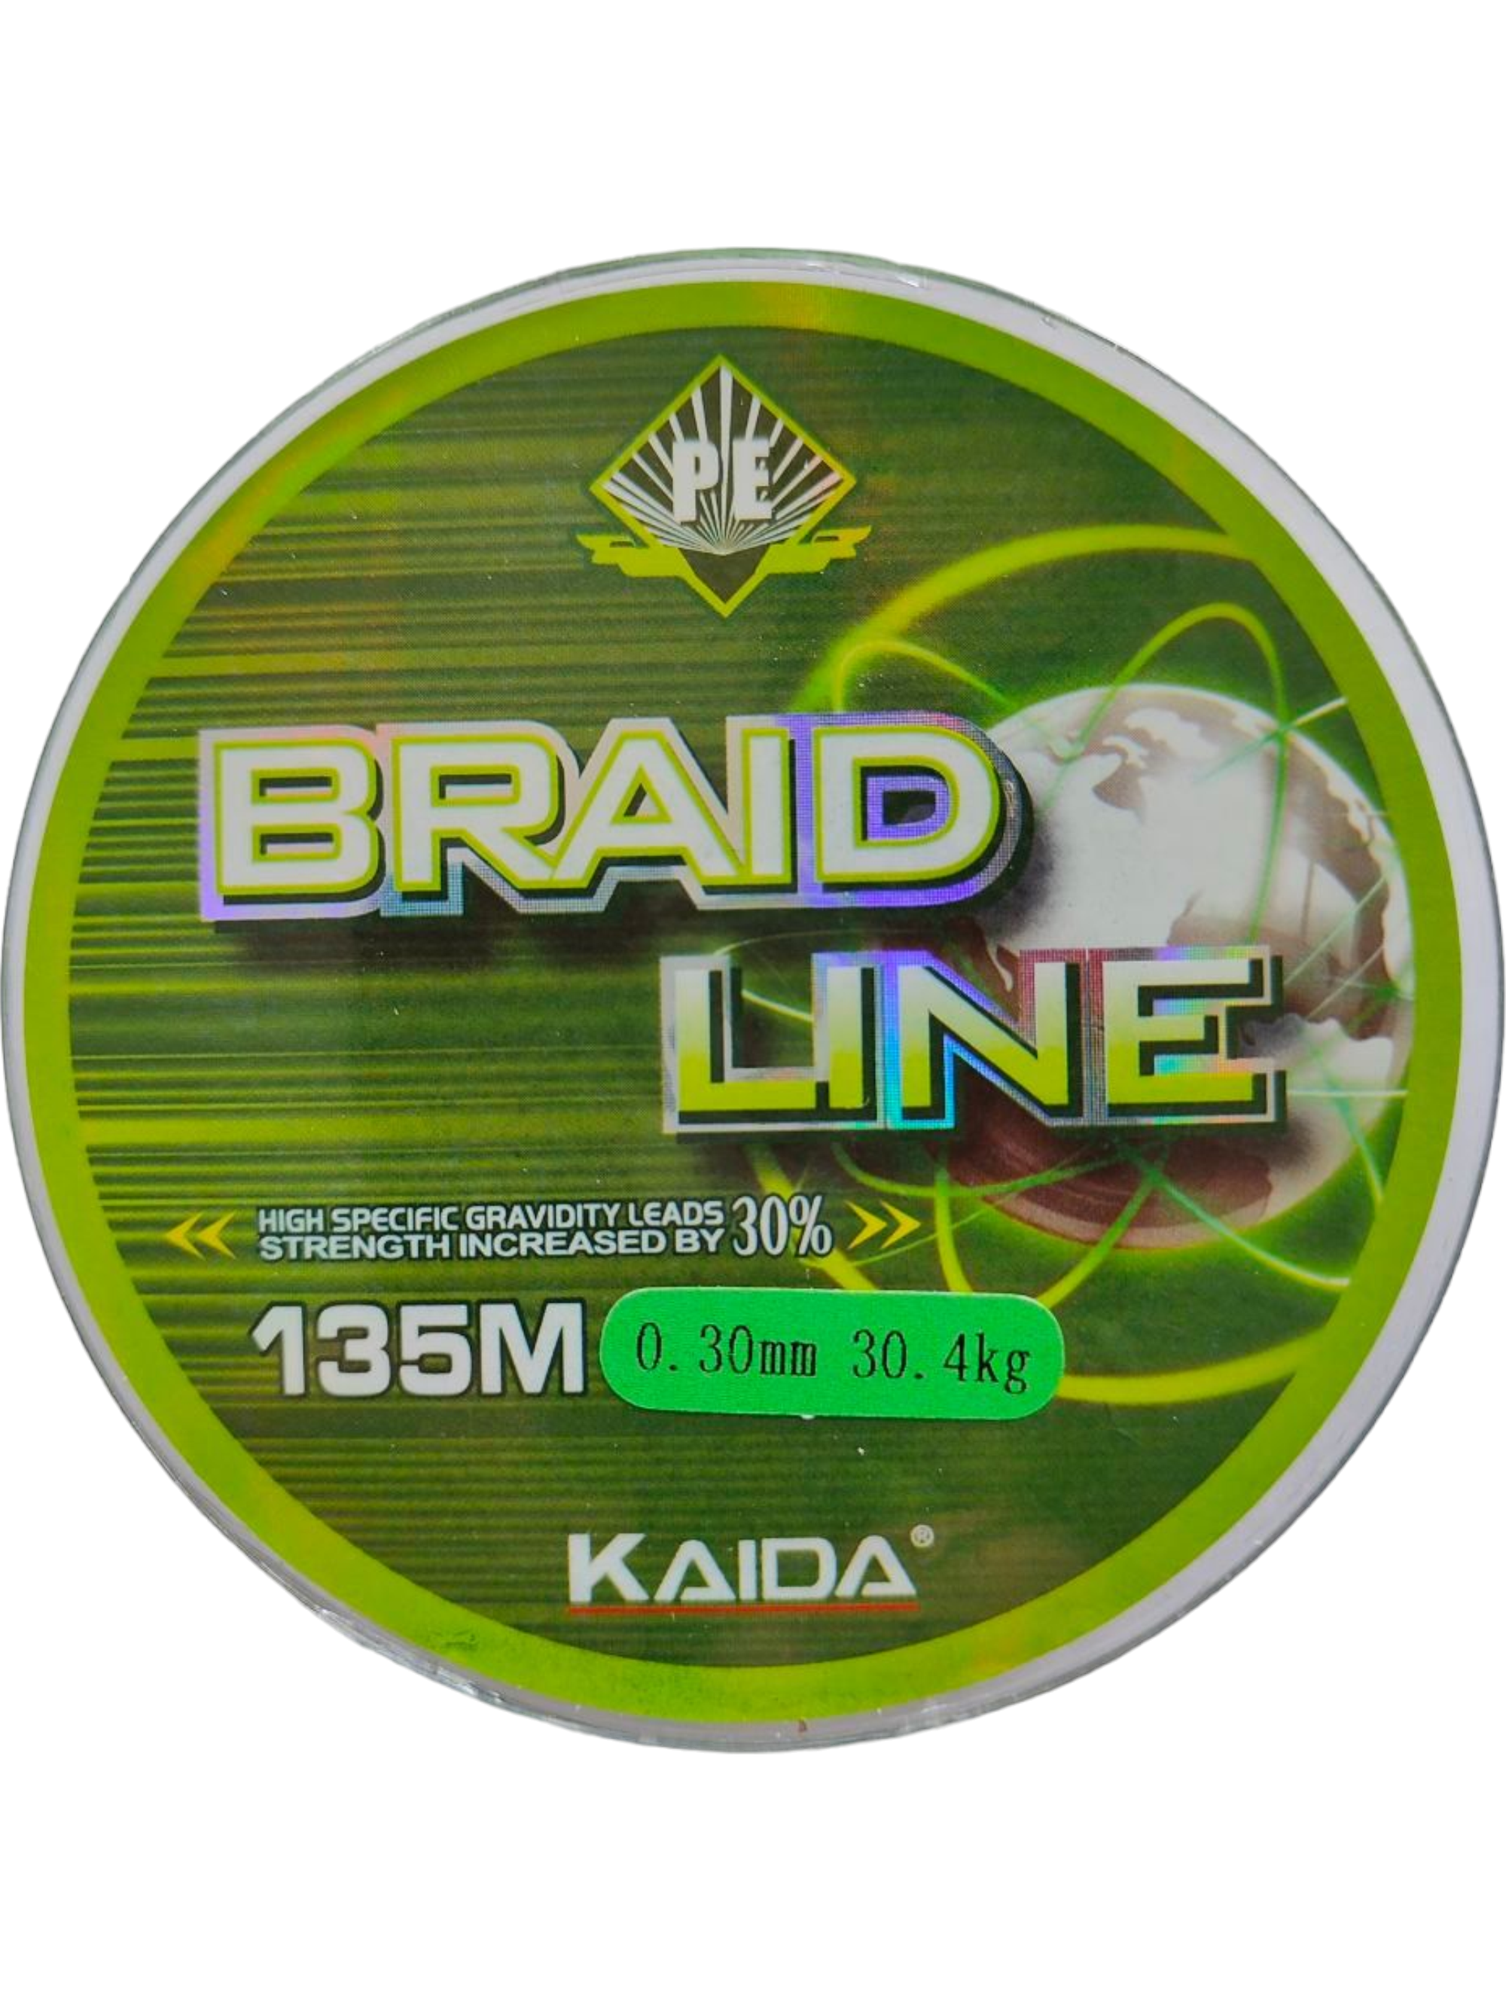 Плетеный шнур BRAID LINE Каида green 135m 0,30 мм 30.4кг